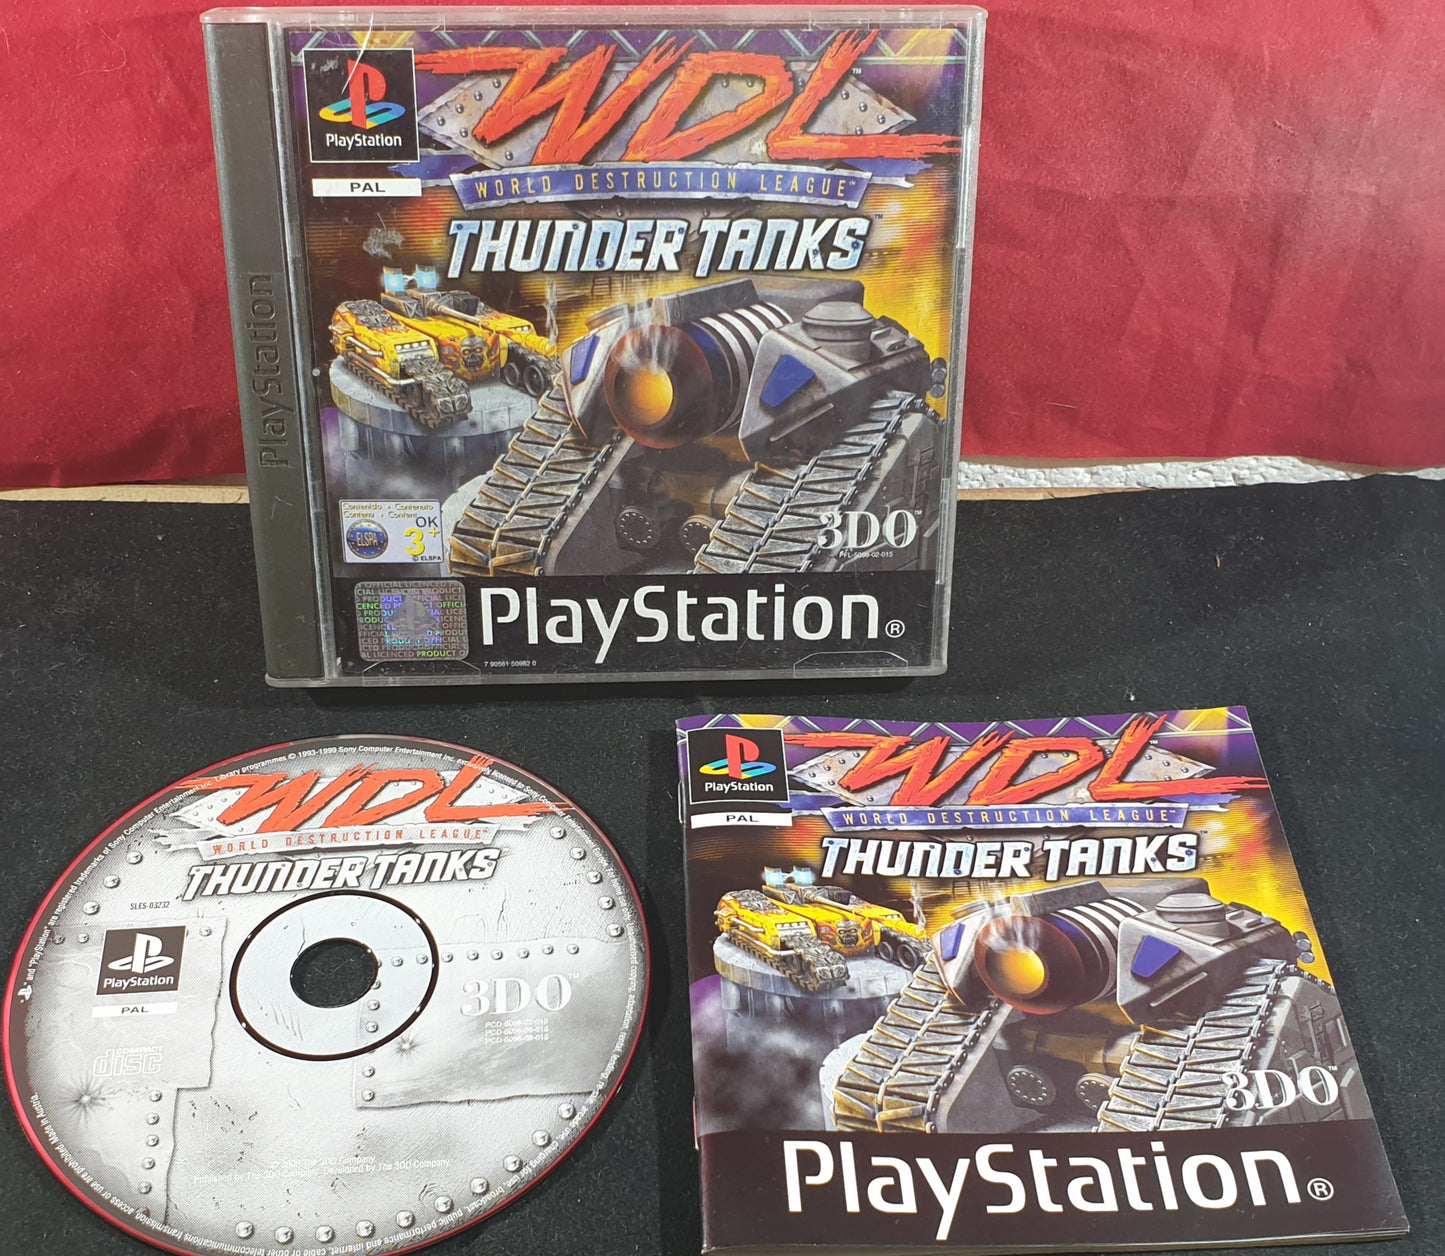 World Destruction League Thunder Tanks Sony Playstation 1 (PS1) Game